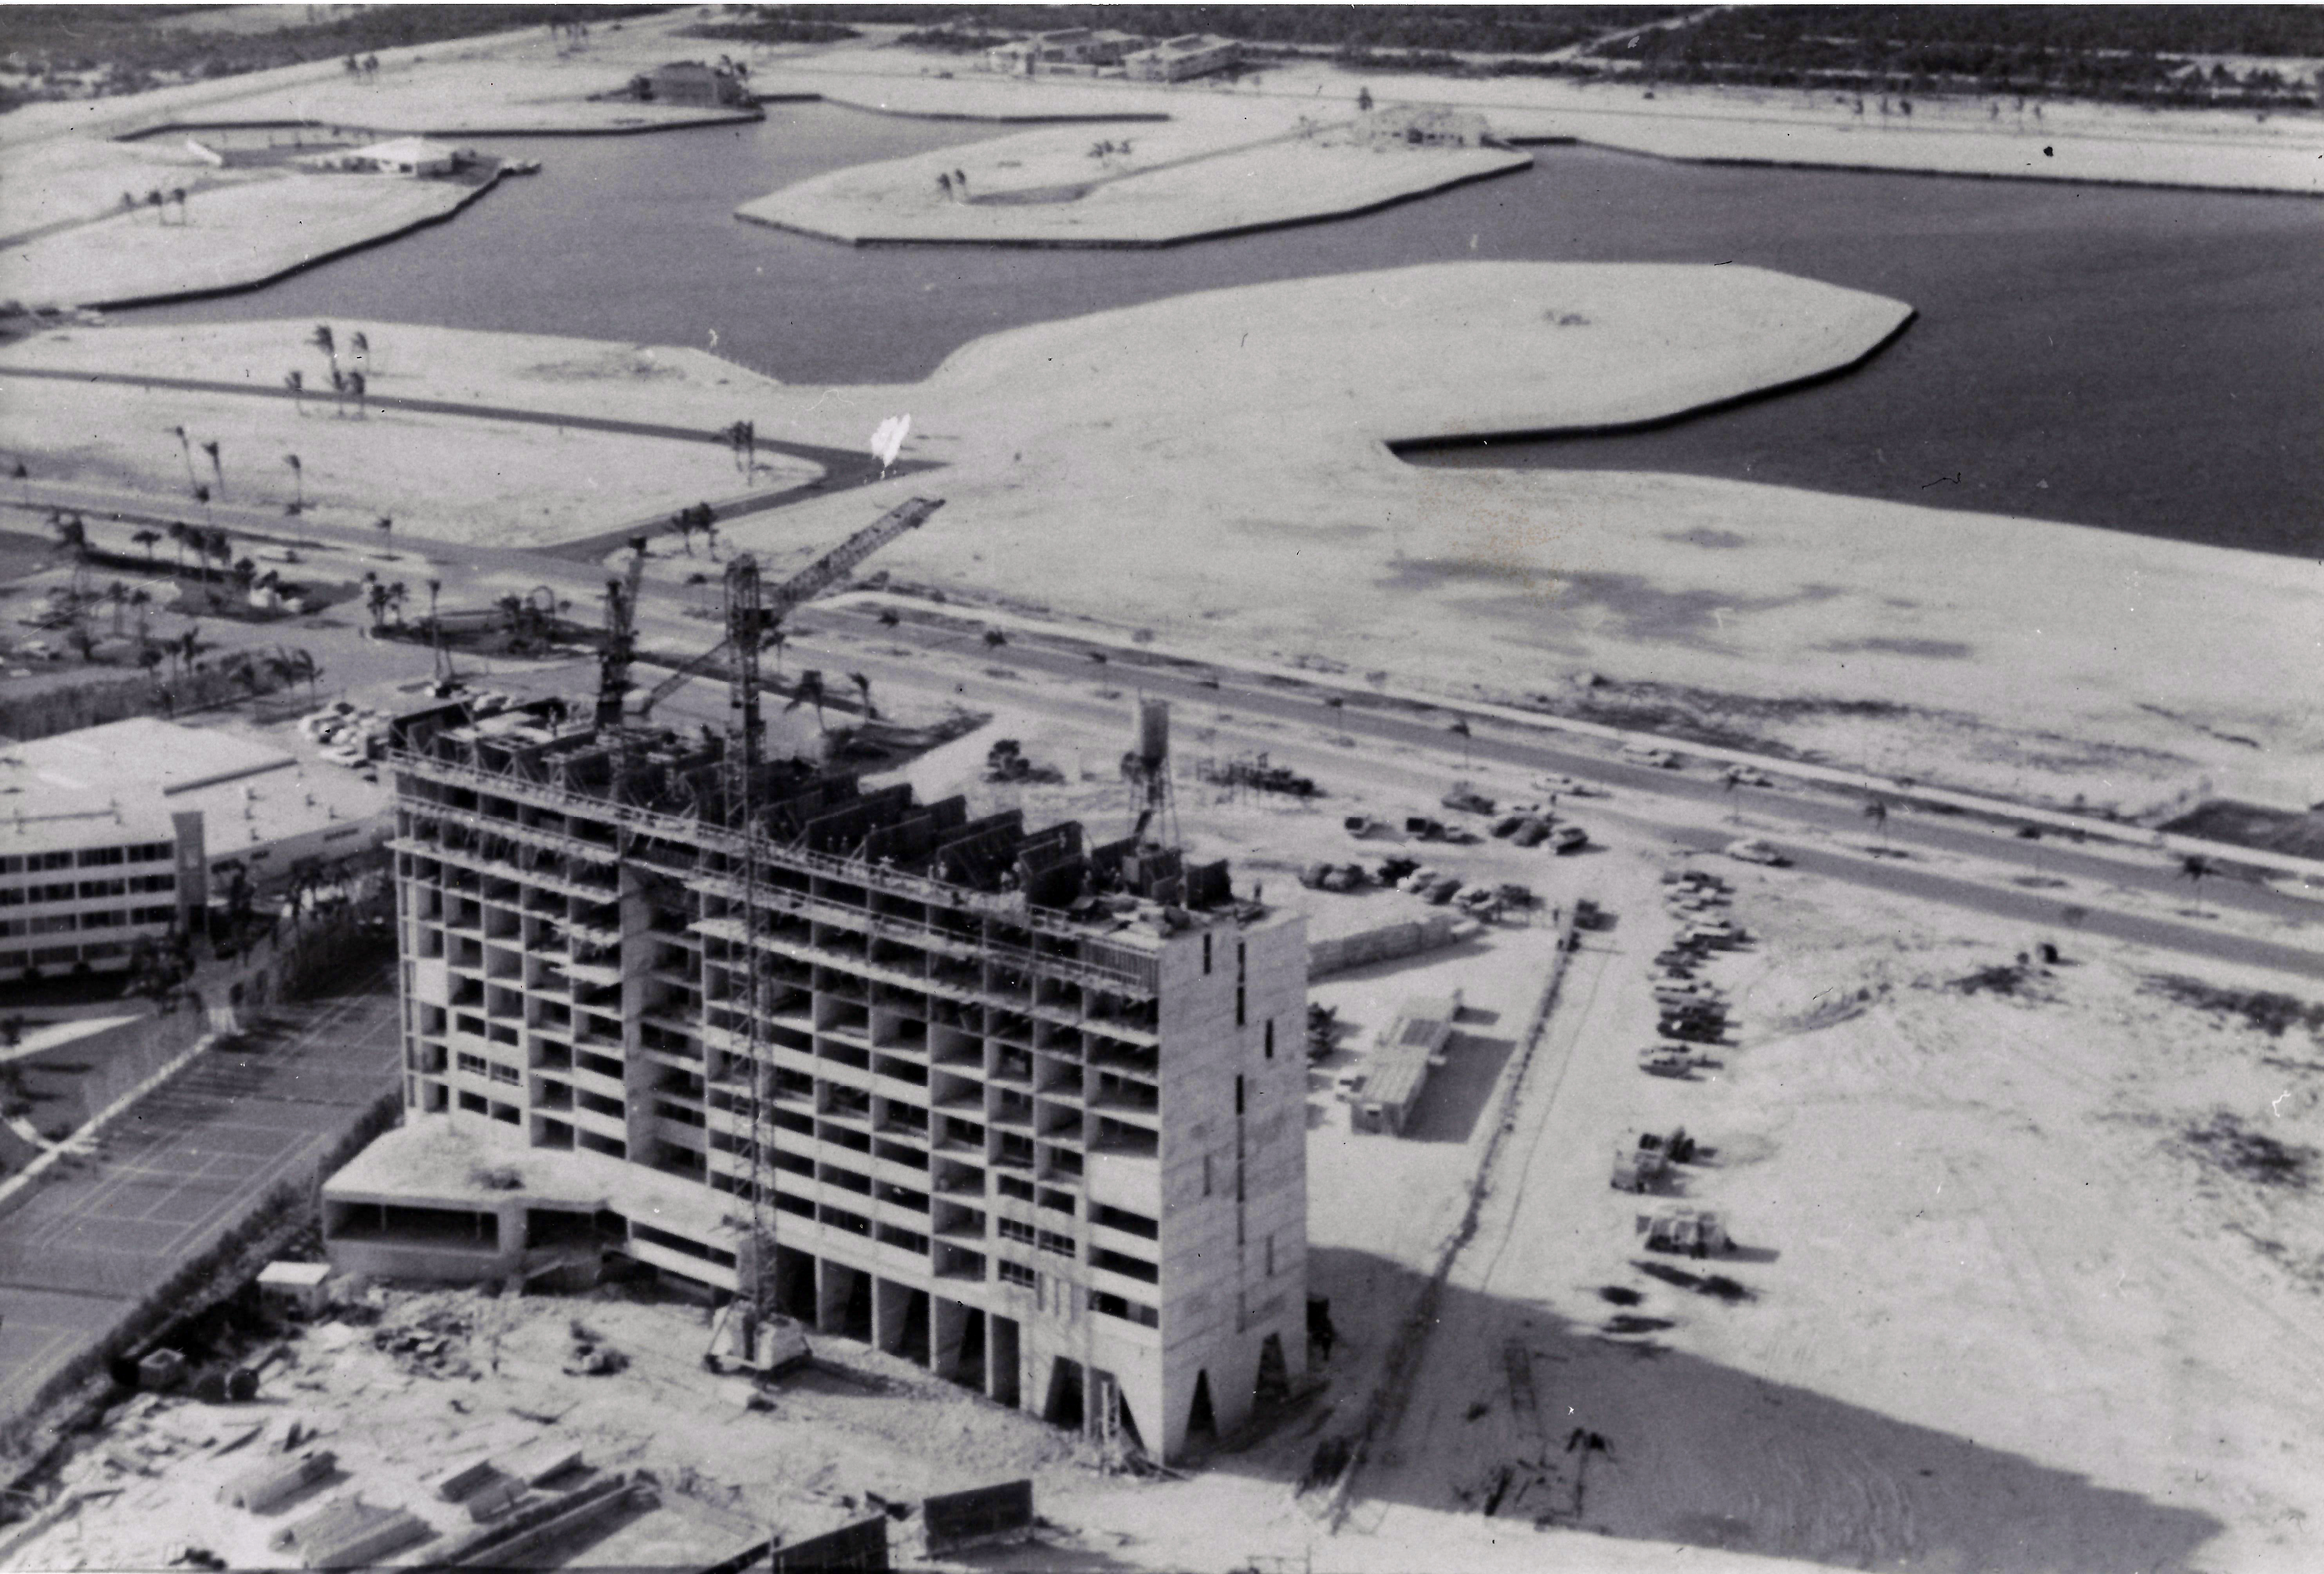 Aerial view of Oceanus Hotel under constrction, 1960's